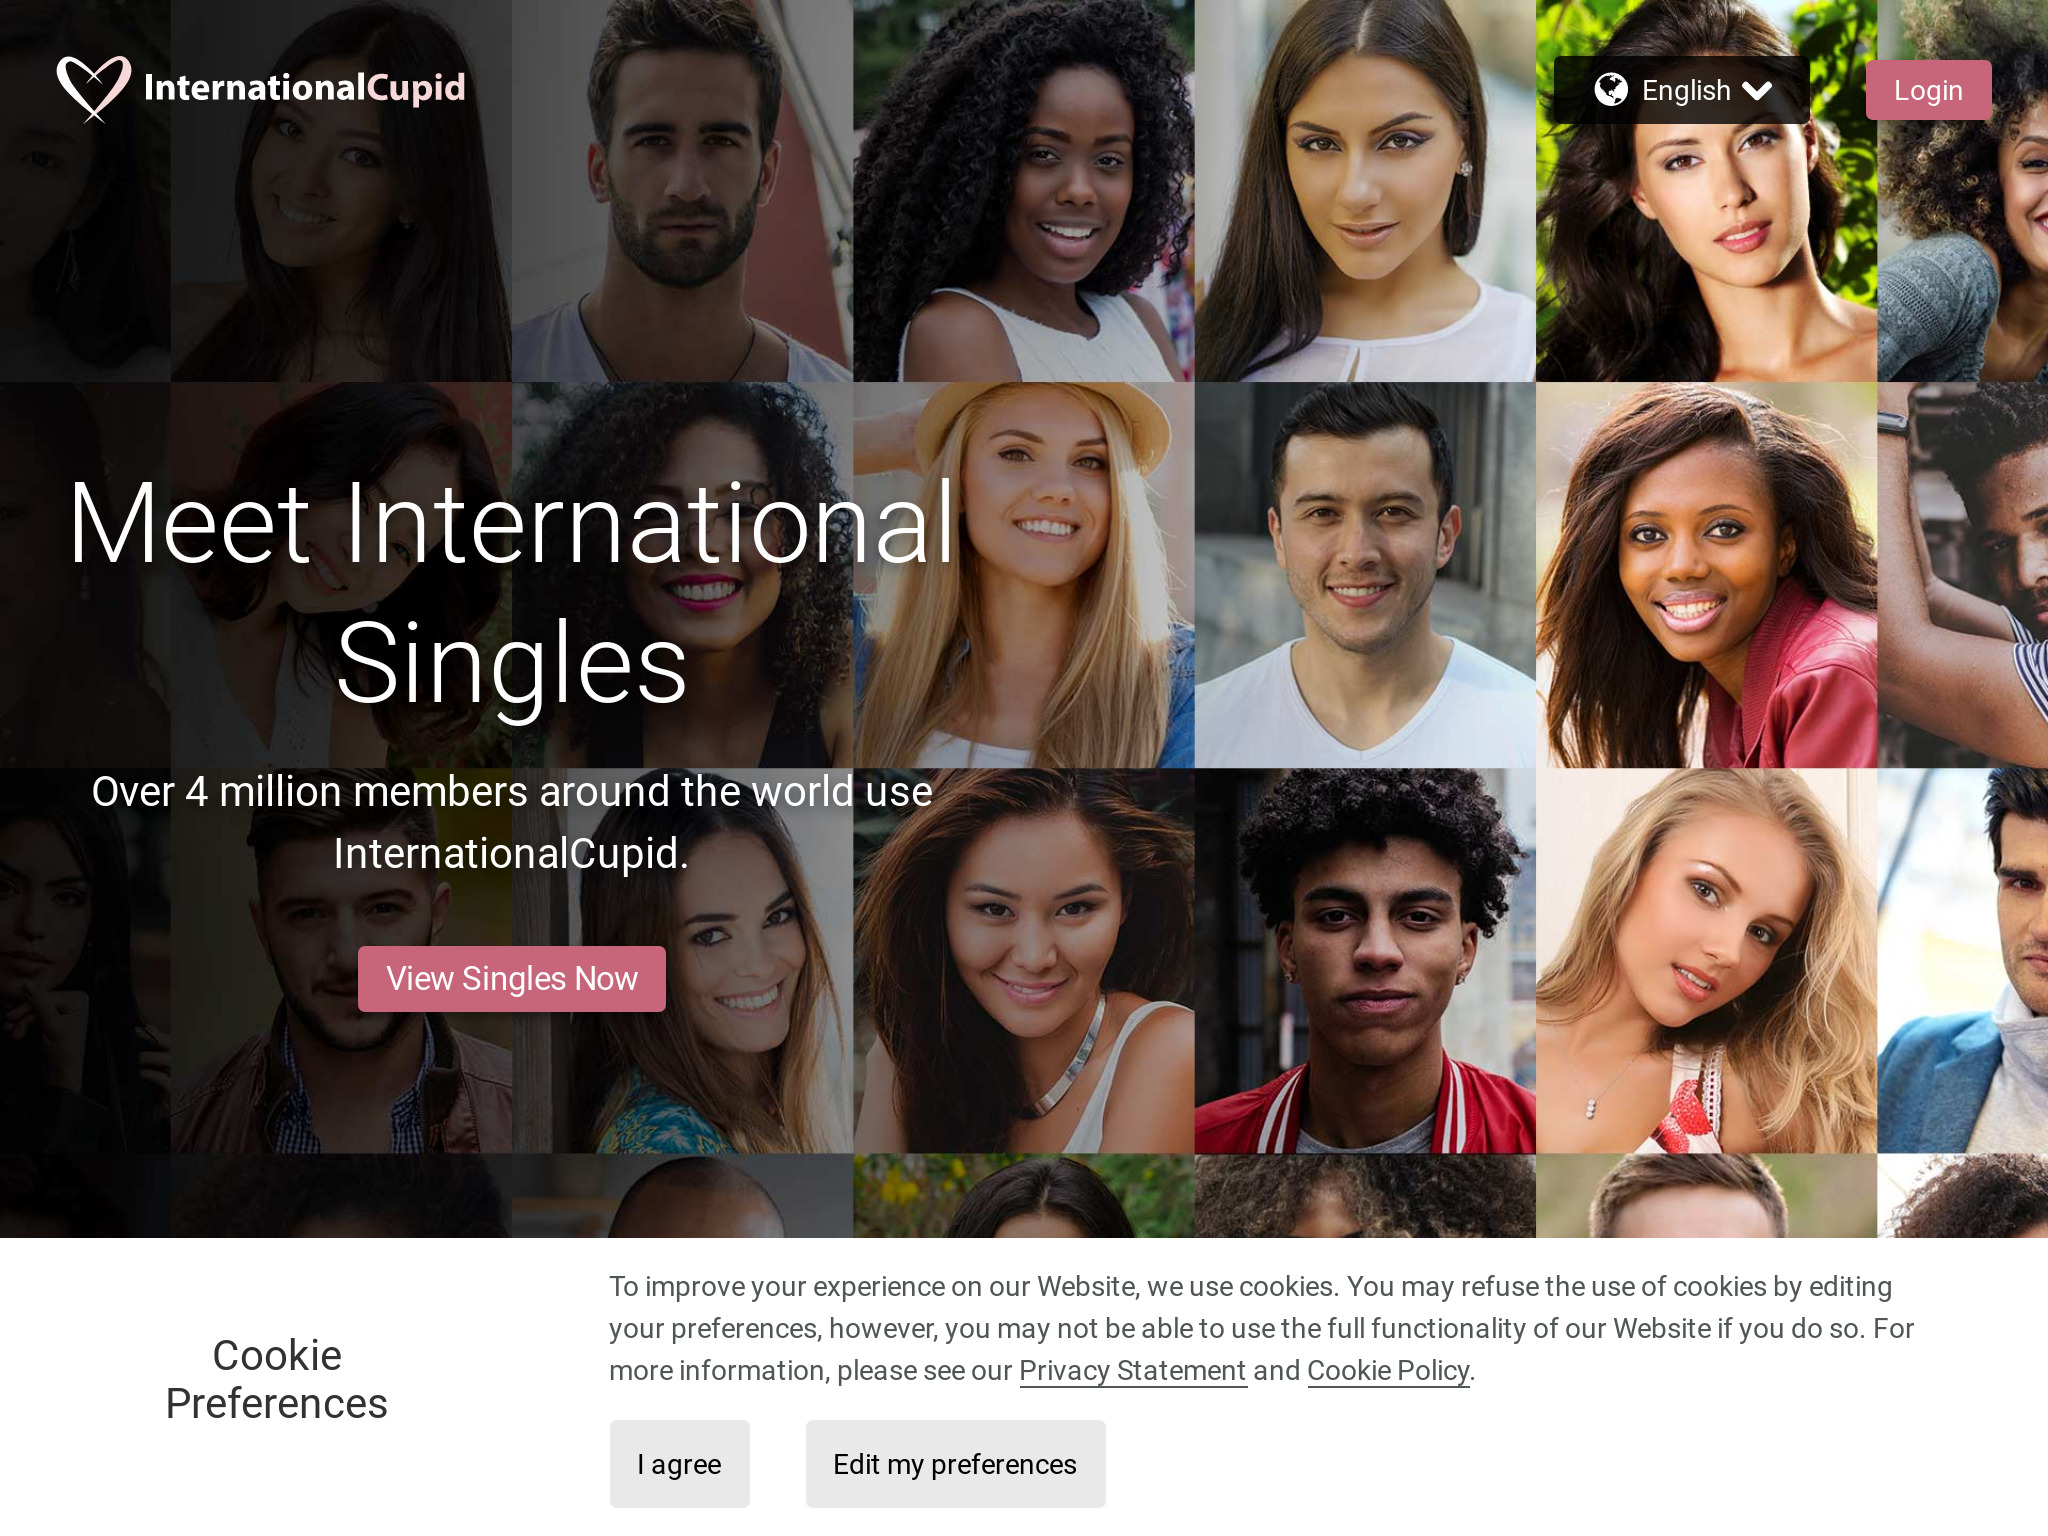 Recensione di InternationalCupid: è sicura e affidabile?